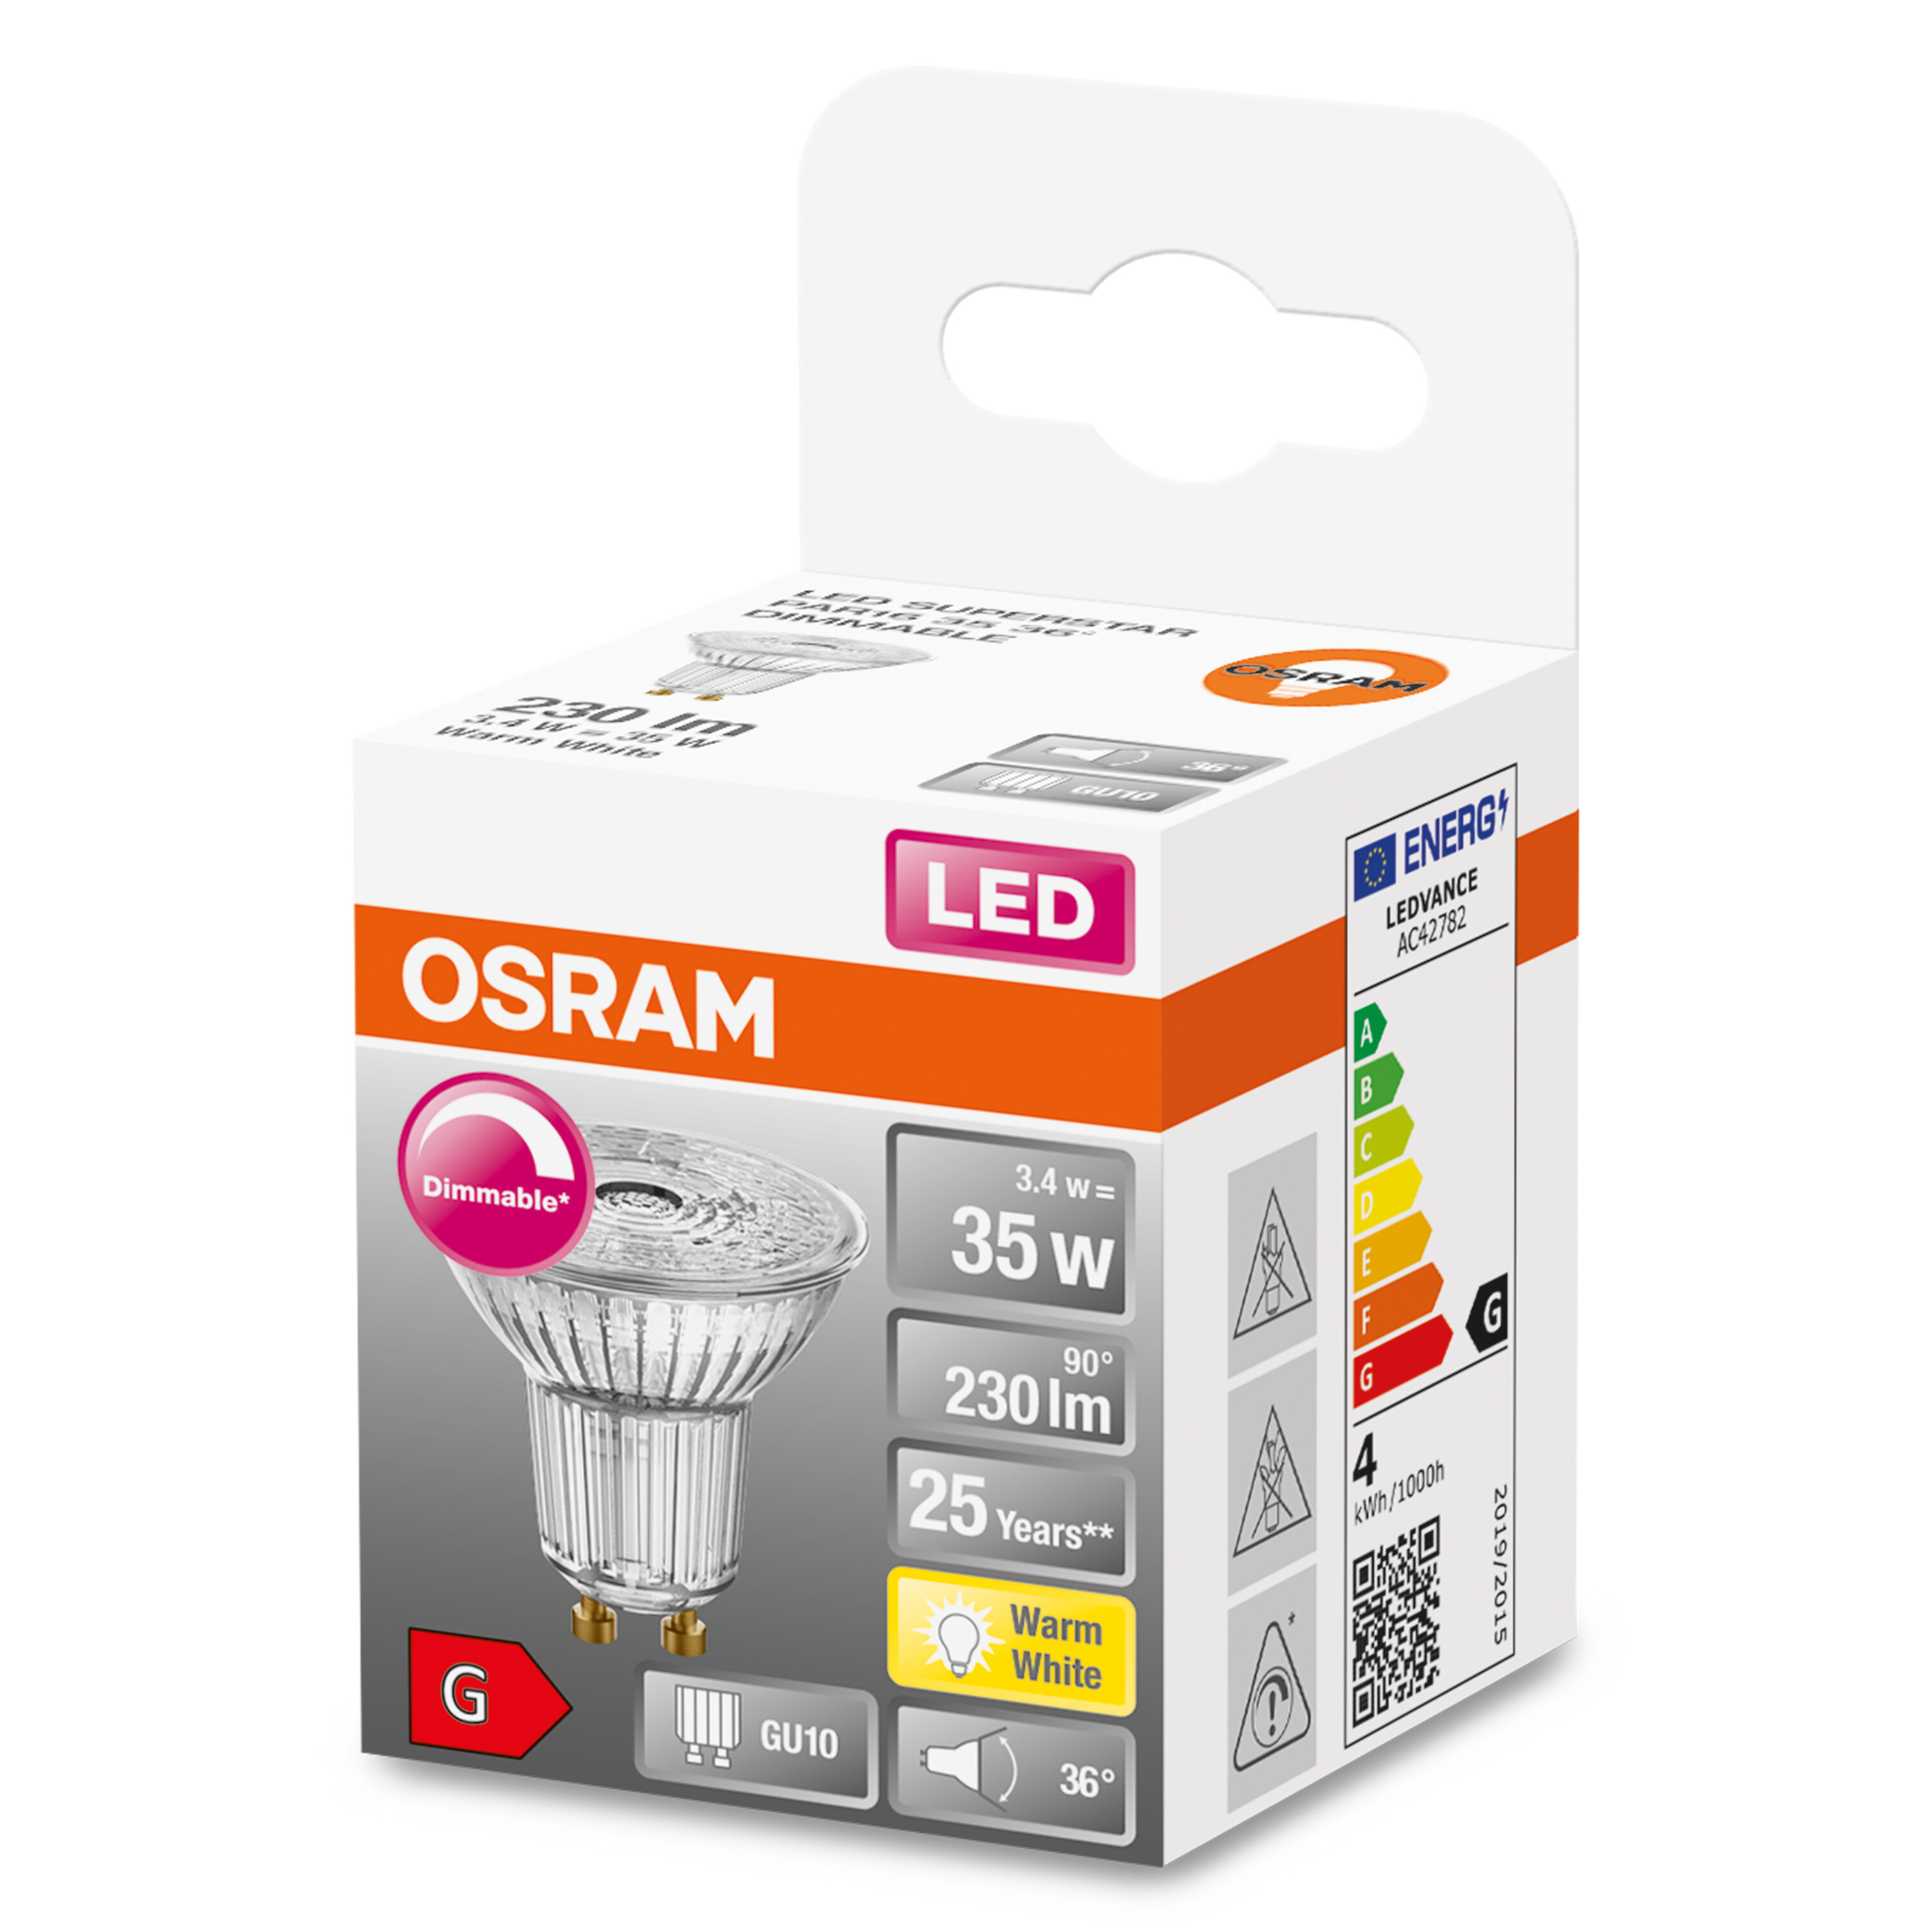 OSRAM  LED SUPERSTAR PAR16 Lampe Lumen 230 Warmweiß LED